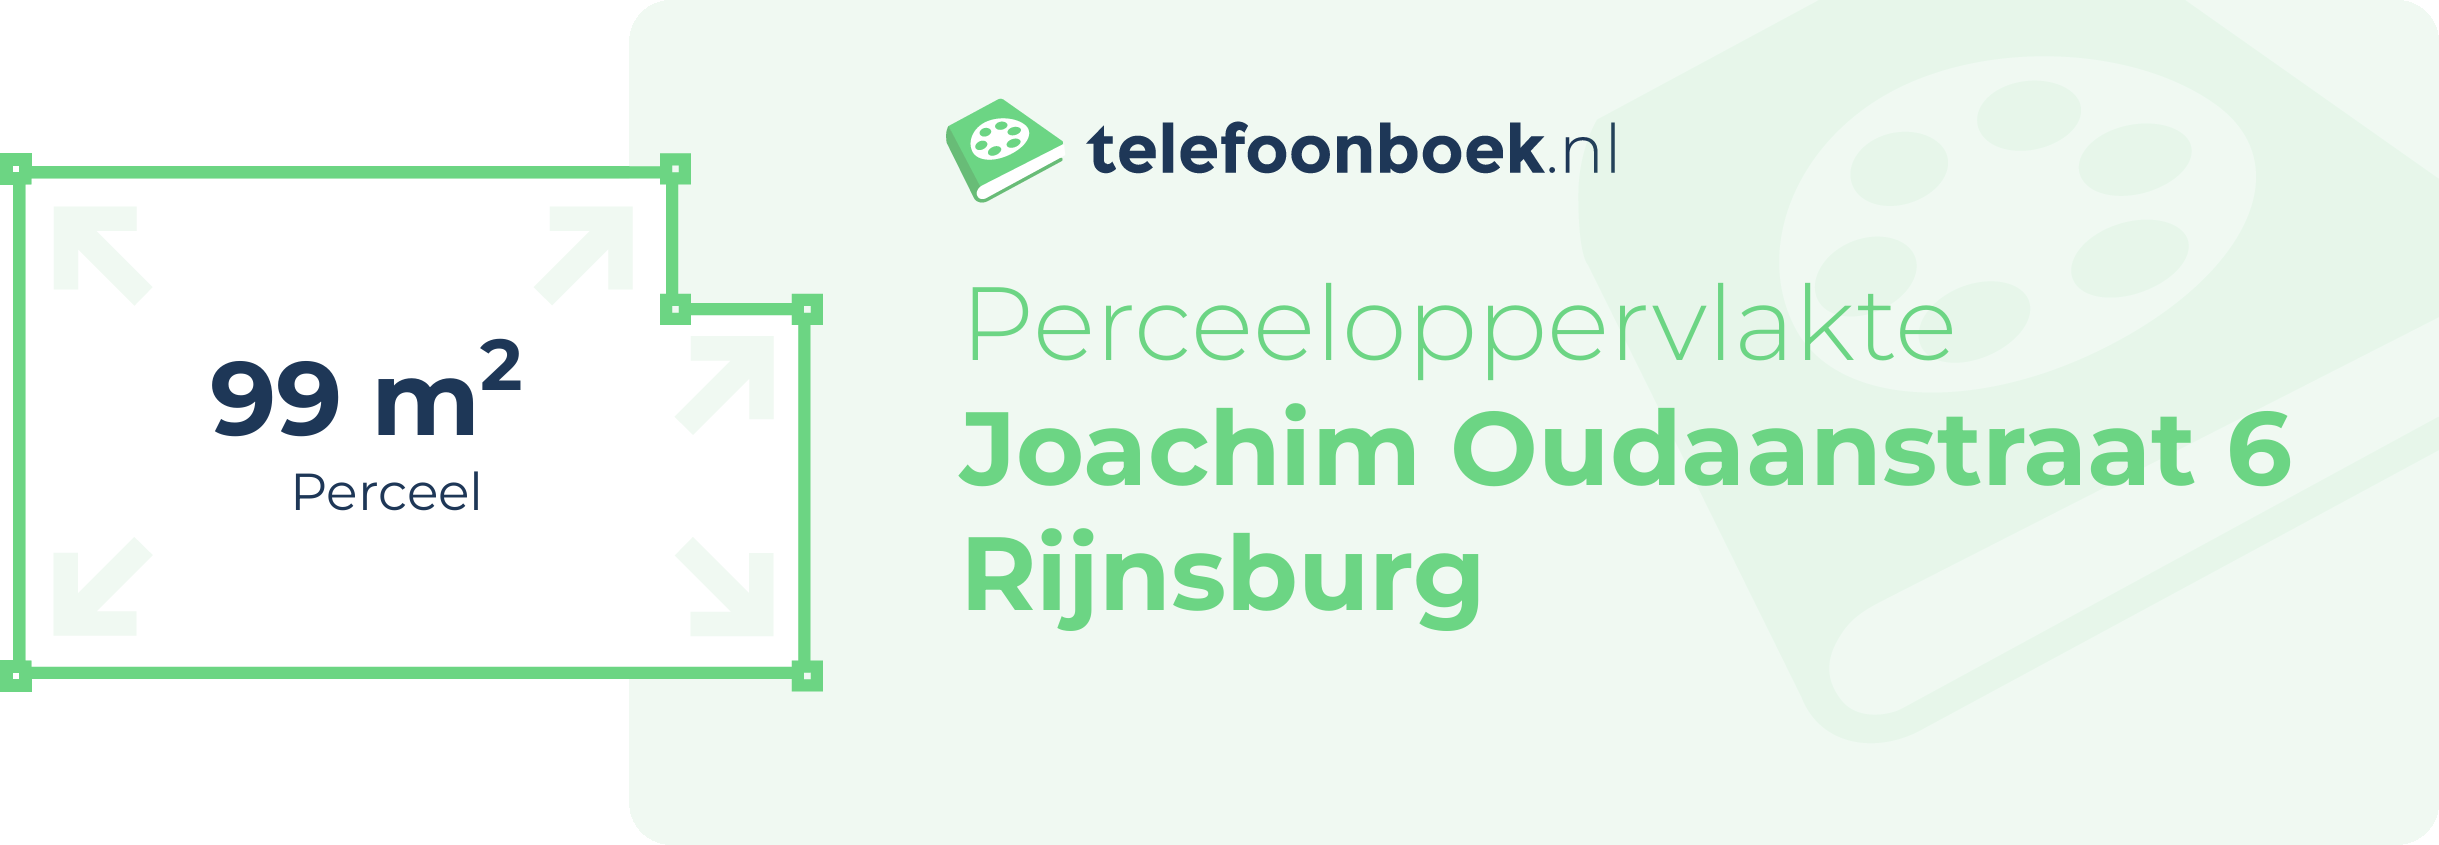 Perceeloppervlakte Joachim Oudaanstraat 6 Rijnsburg